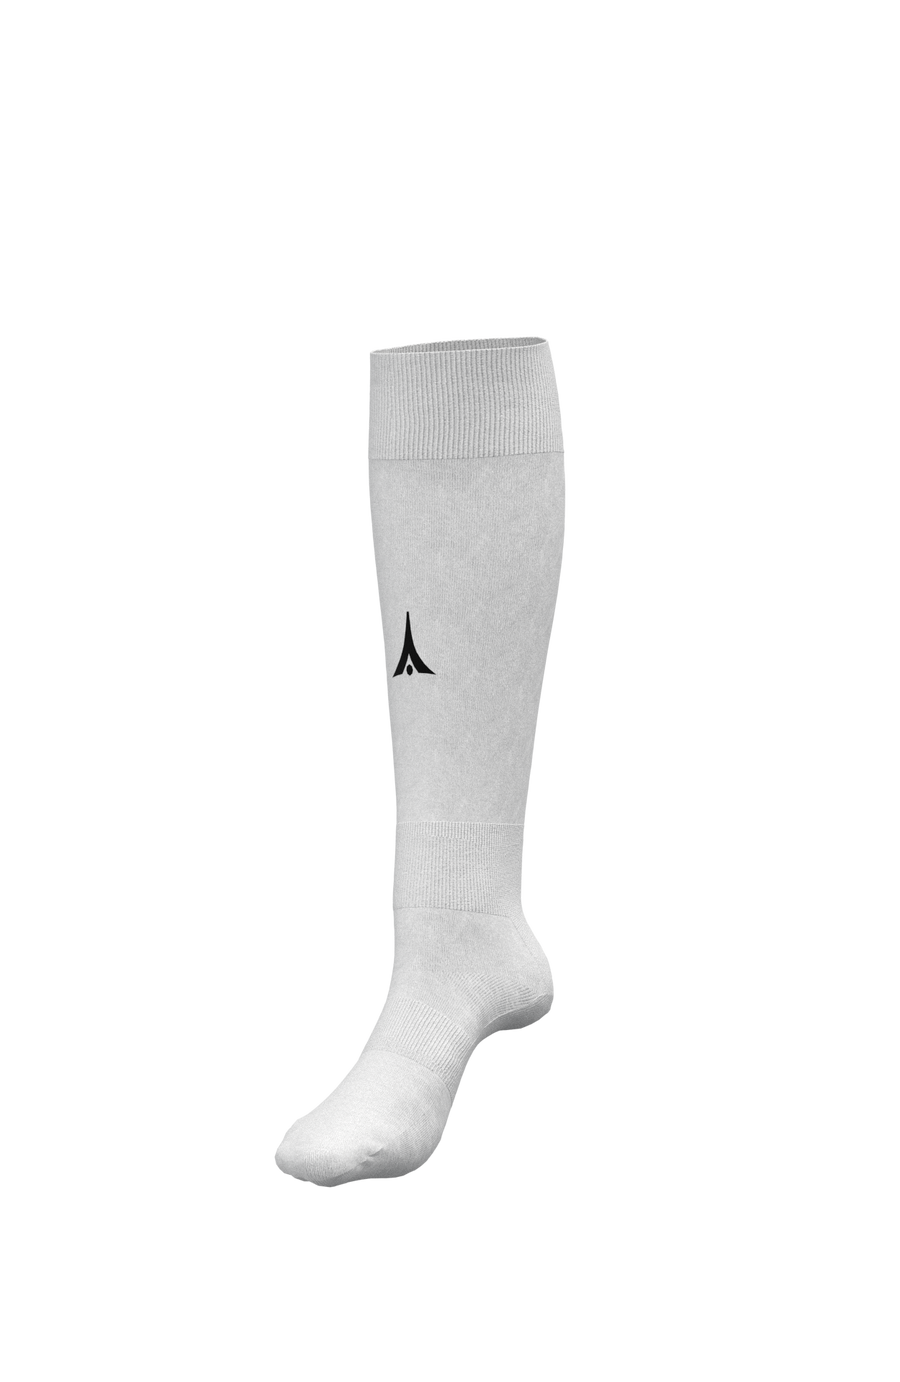 $10.00 - Caño White Soccer Sock